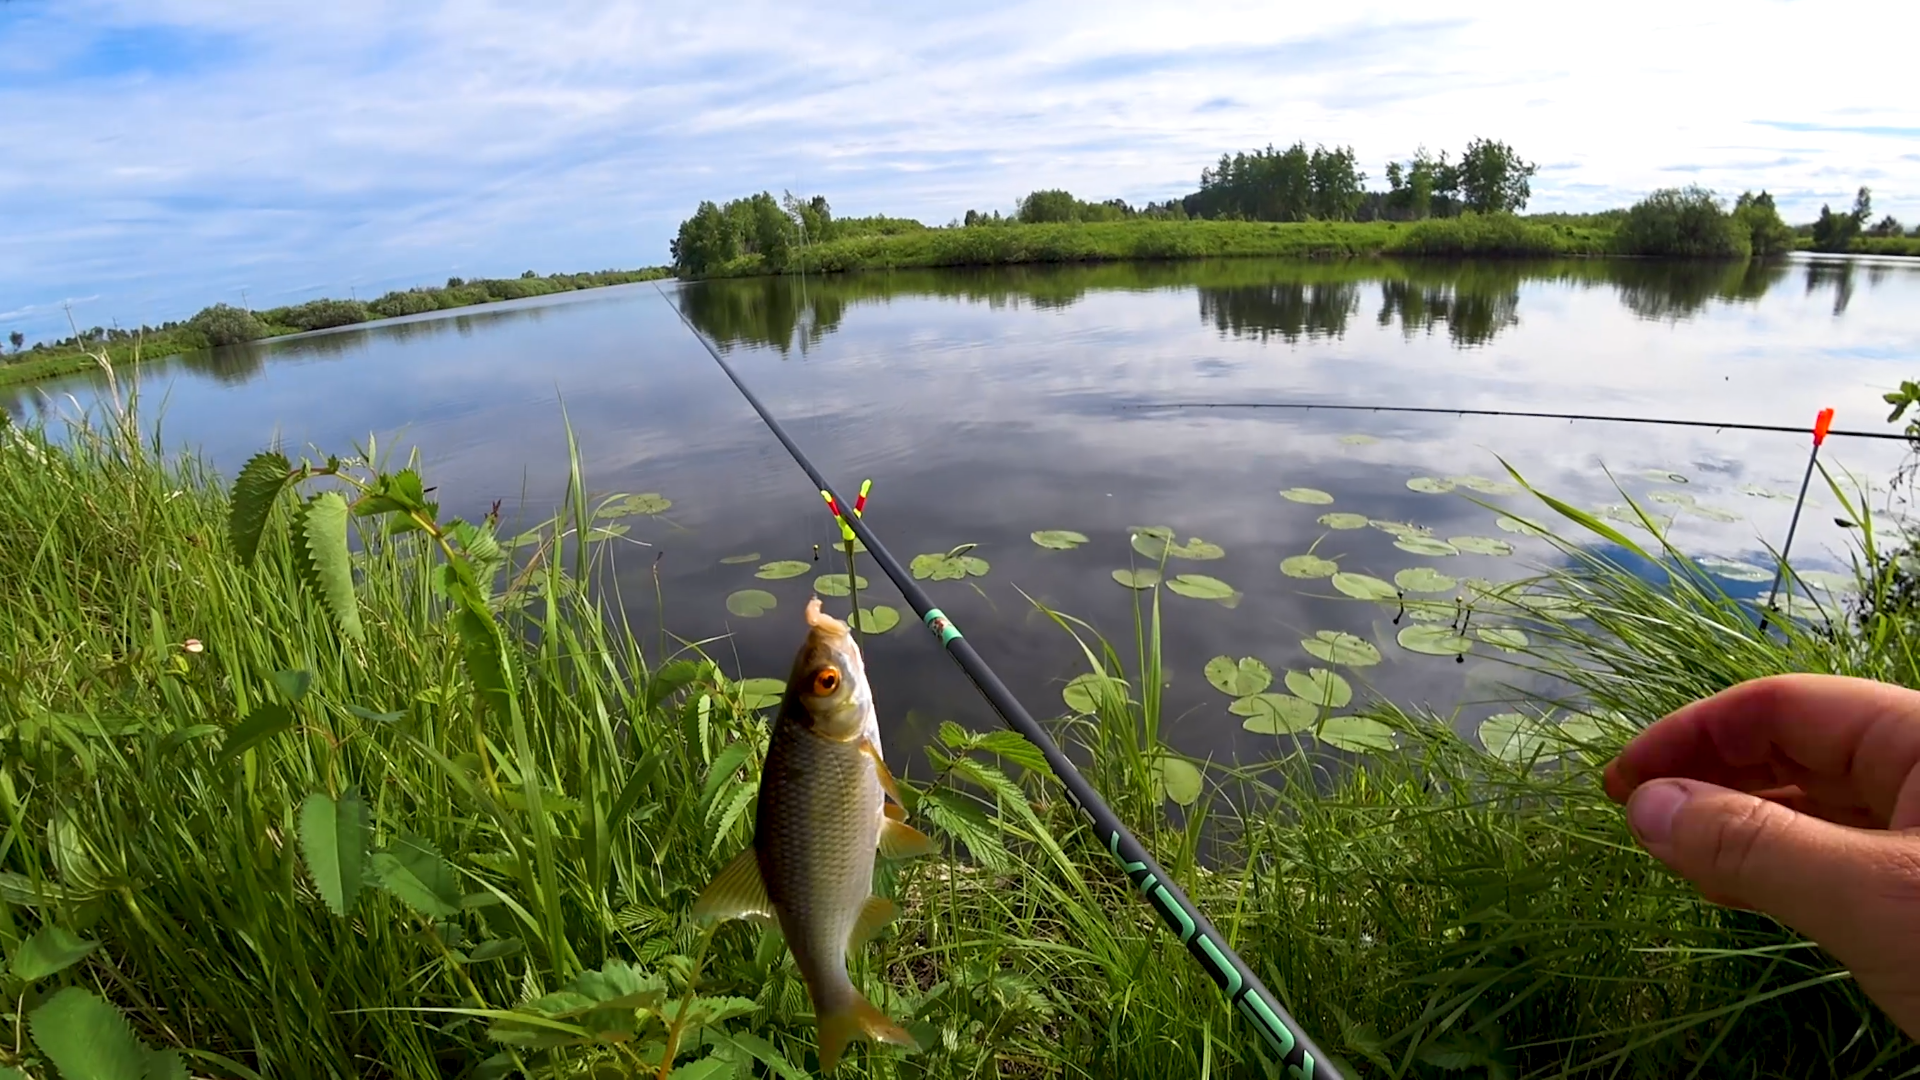 Рыбалка на карася на озерах. Поплавок на окуня. Рыбалка на озере. Поплавочная рыбалка. Поплавок для рыбалки на озере.